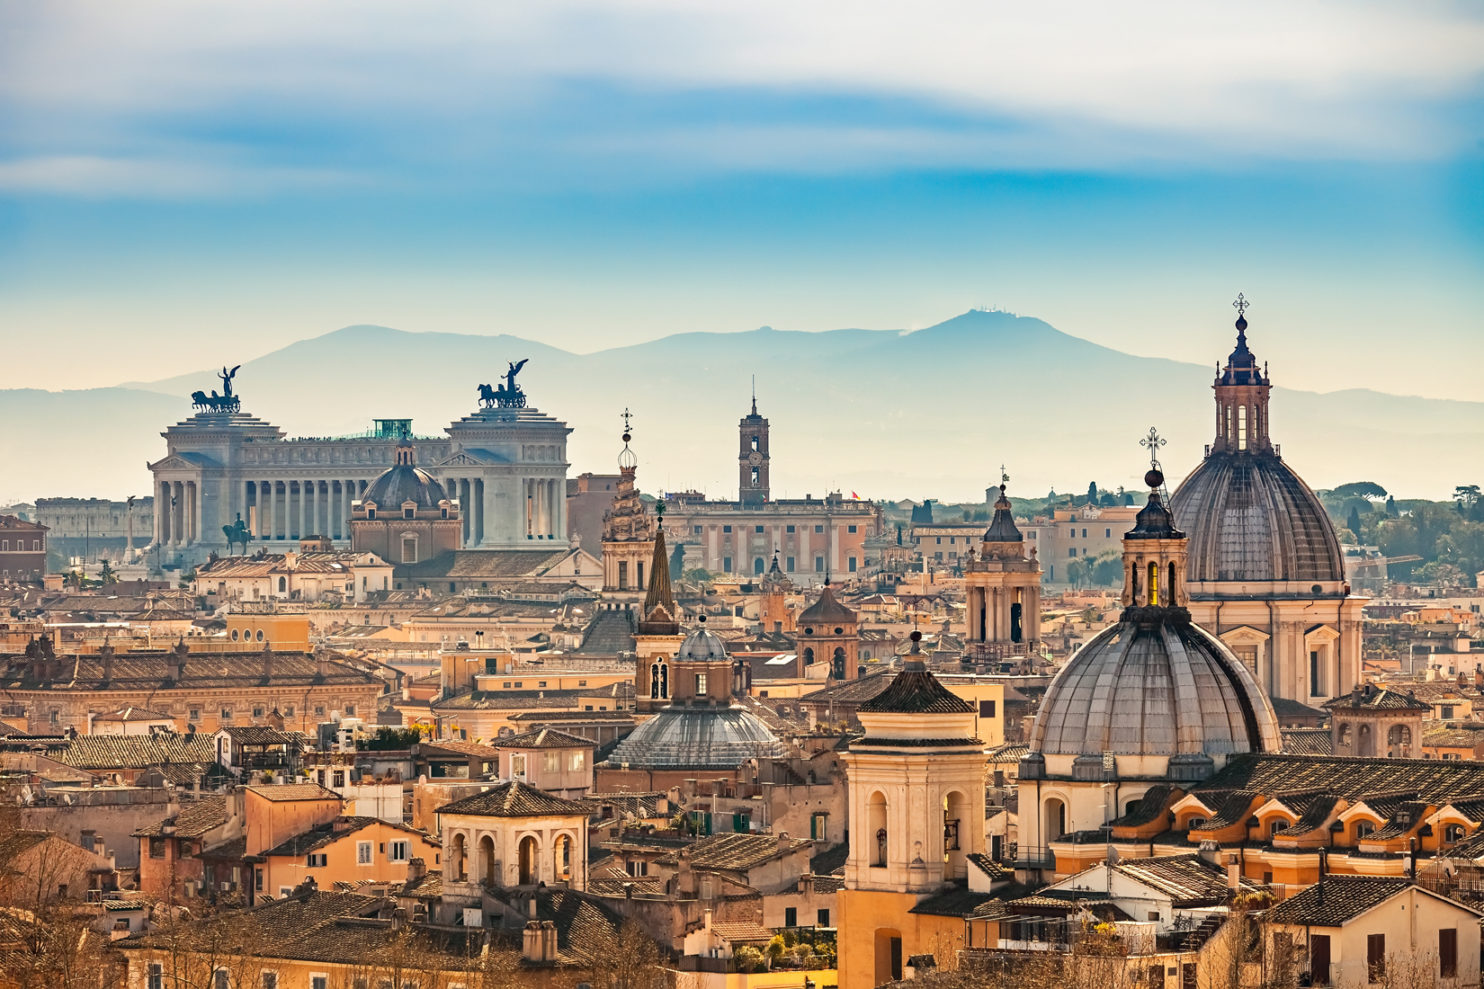 Rome skyline in the morning